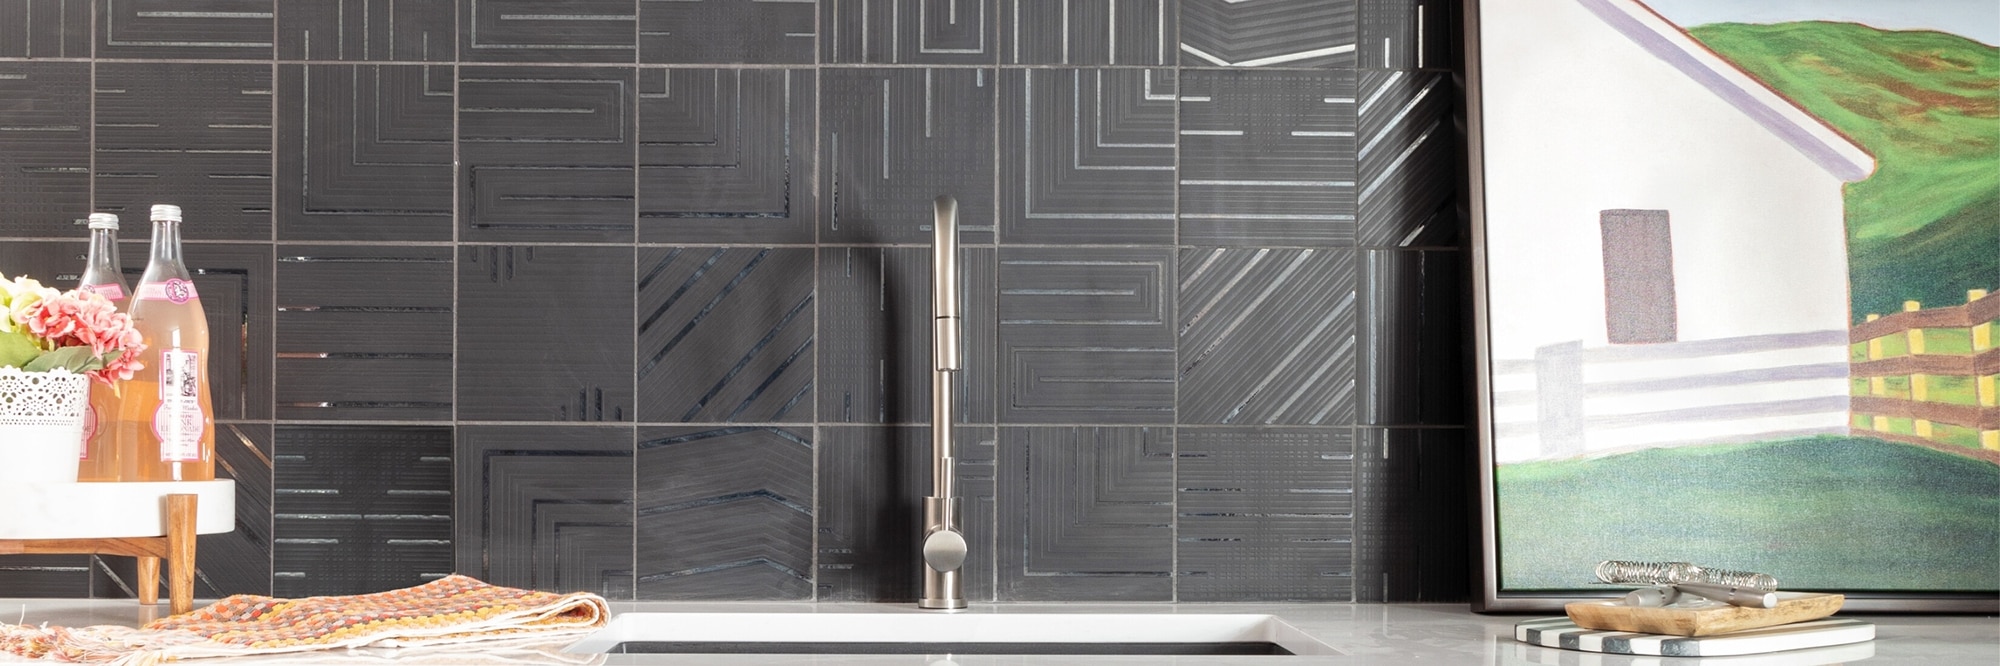 Basement wet bar with black backsplash tile of geometric designs, white quartz countertop, undermount sink with brushed silver faucet.